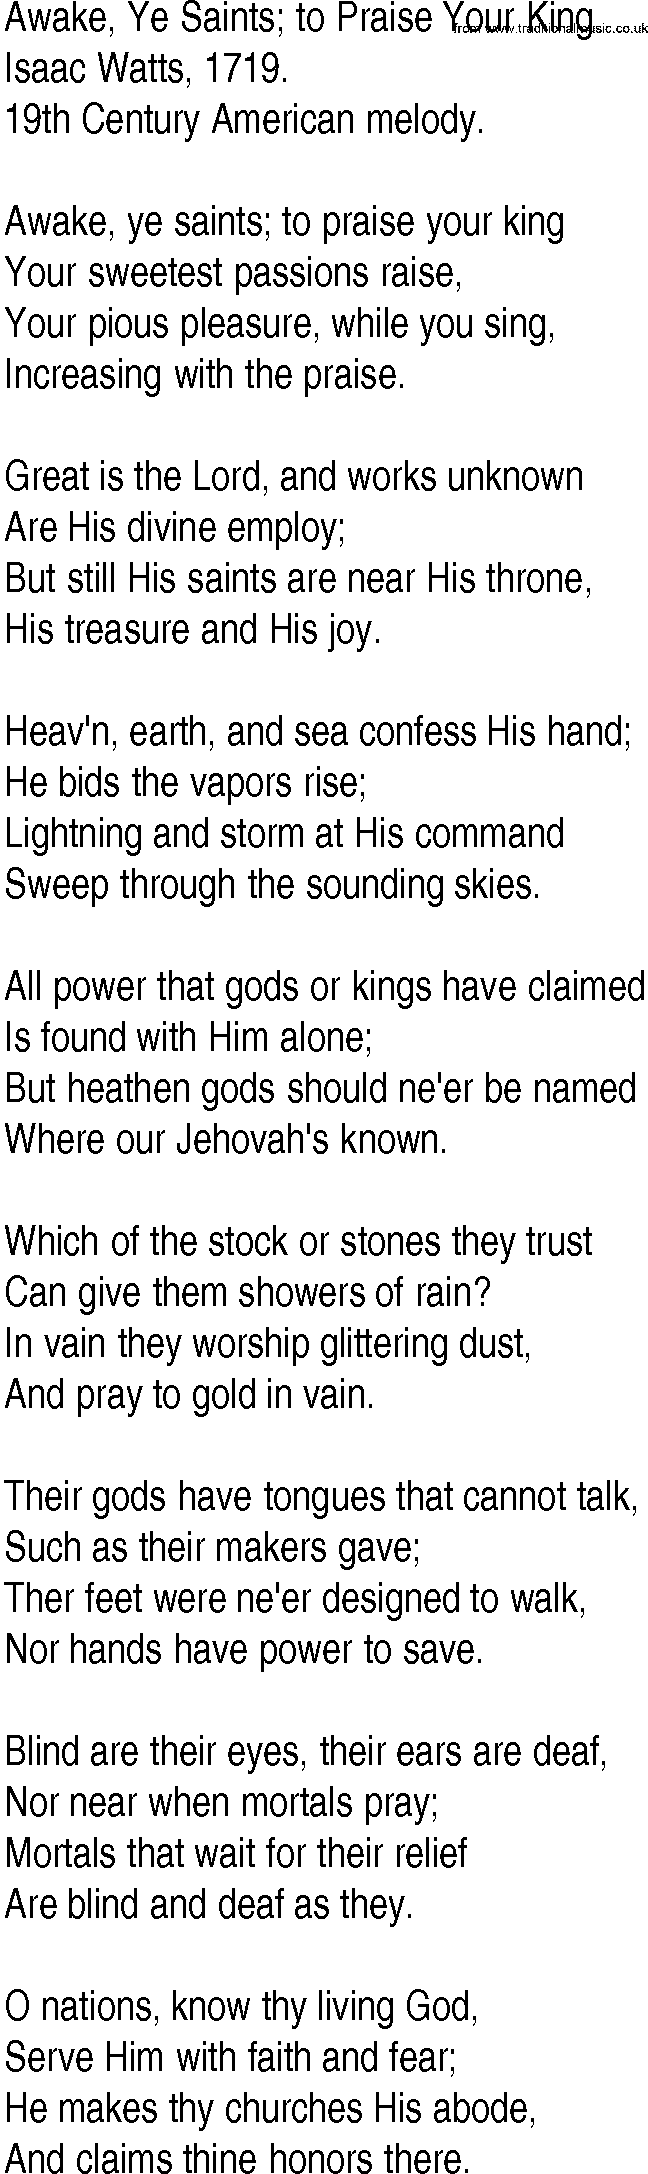 Hymn and Gospel Song: Awake, Ye Saints; to Praise Your King by Isaac Watts lyrics